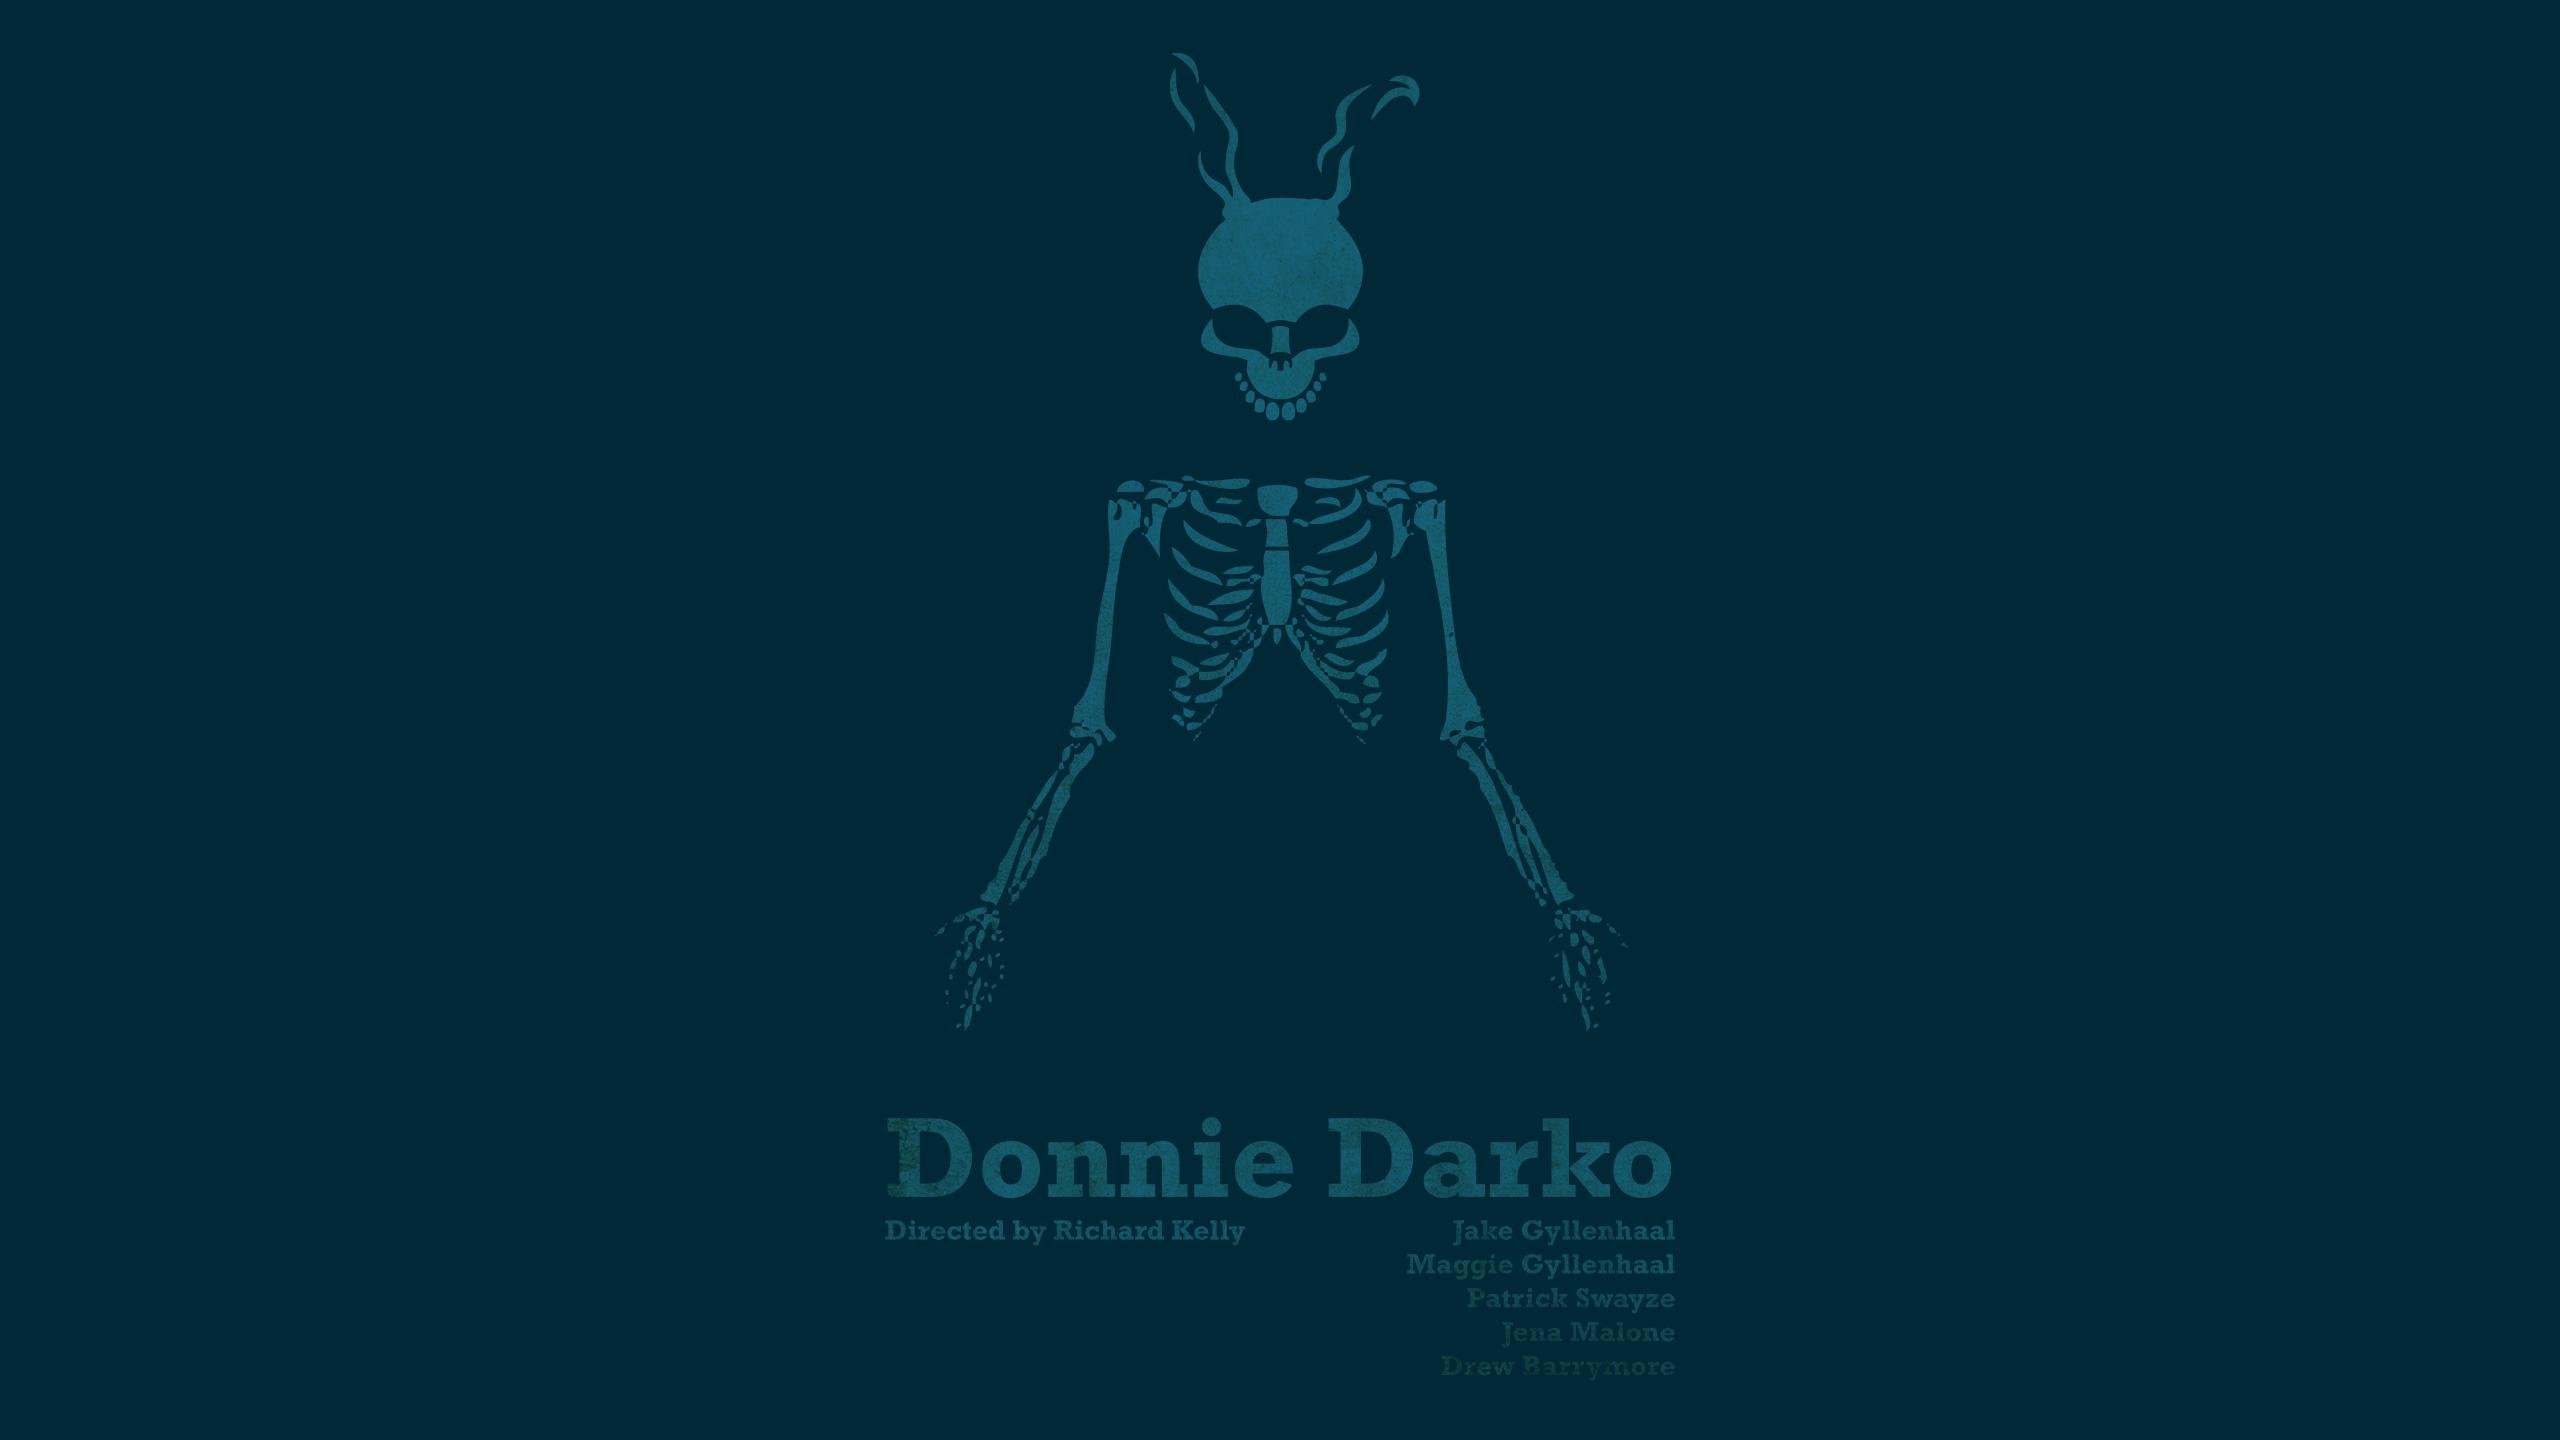 High resolution Donnie Darko hd 2560x1440 background ID:89868 for computer